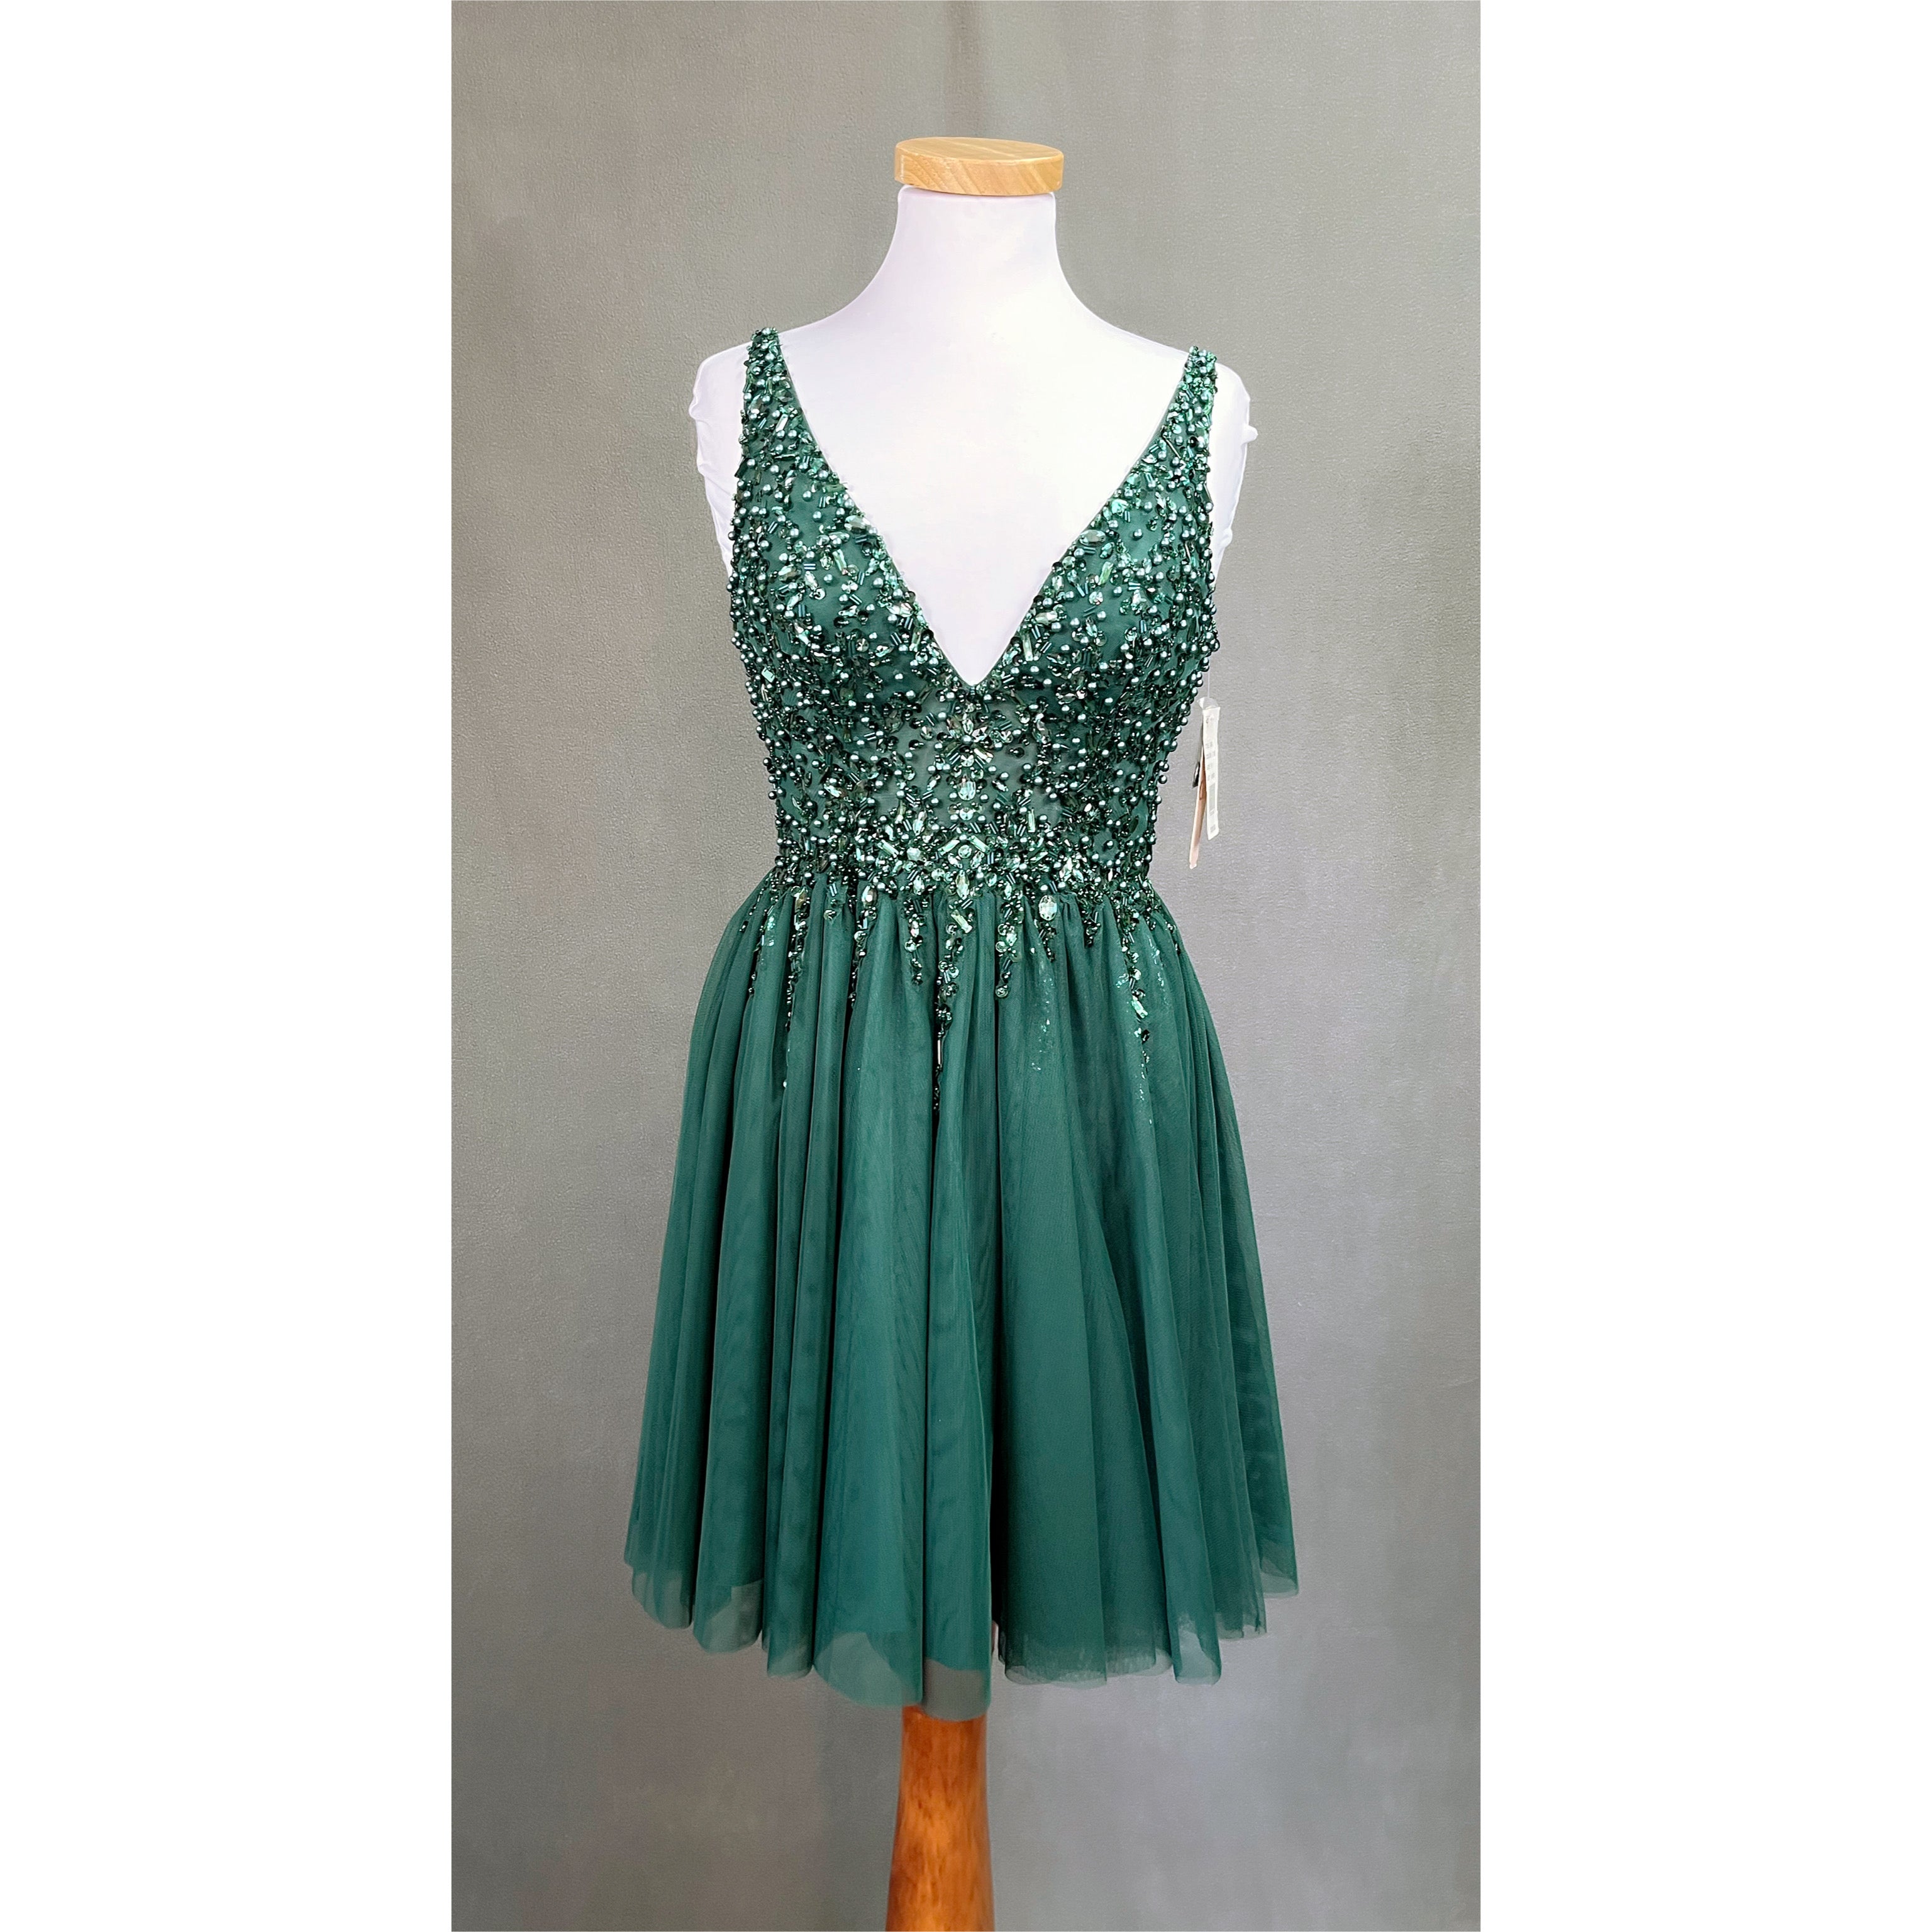 Gianni Bini evergreen dress, size 3, NEW WITH TAGS!